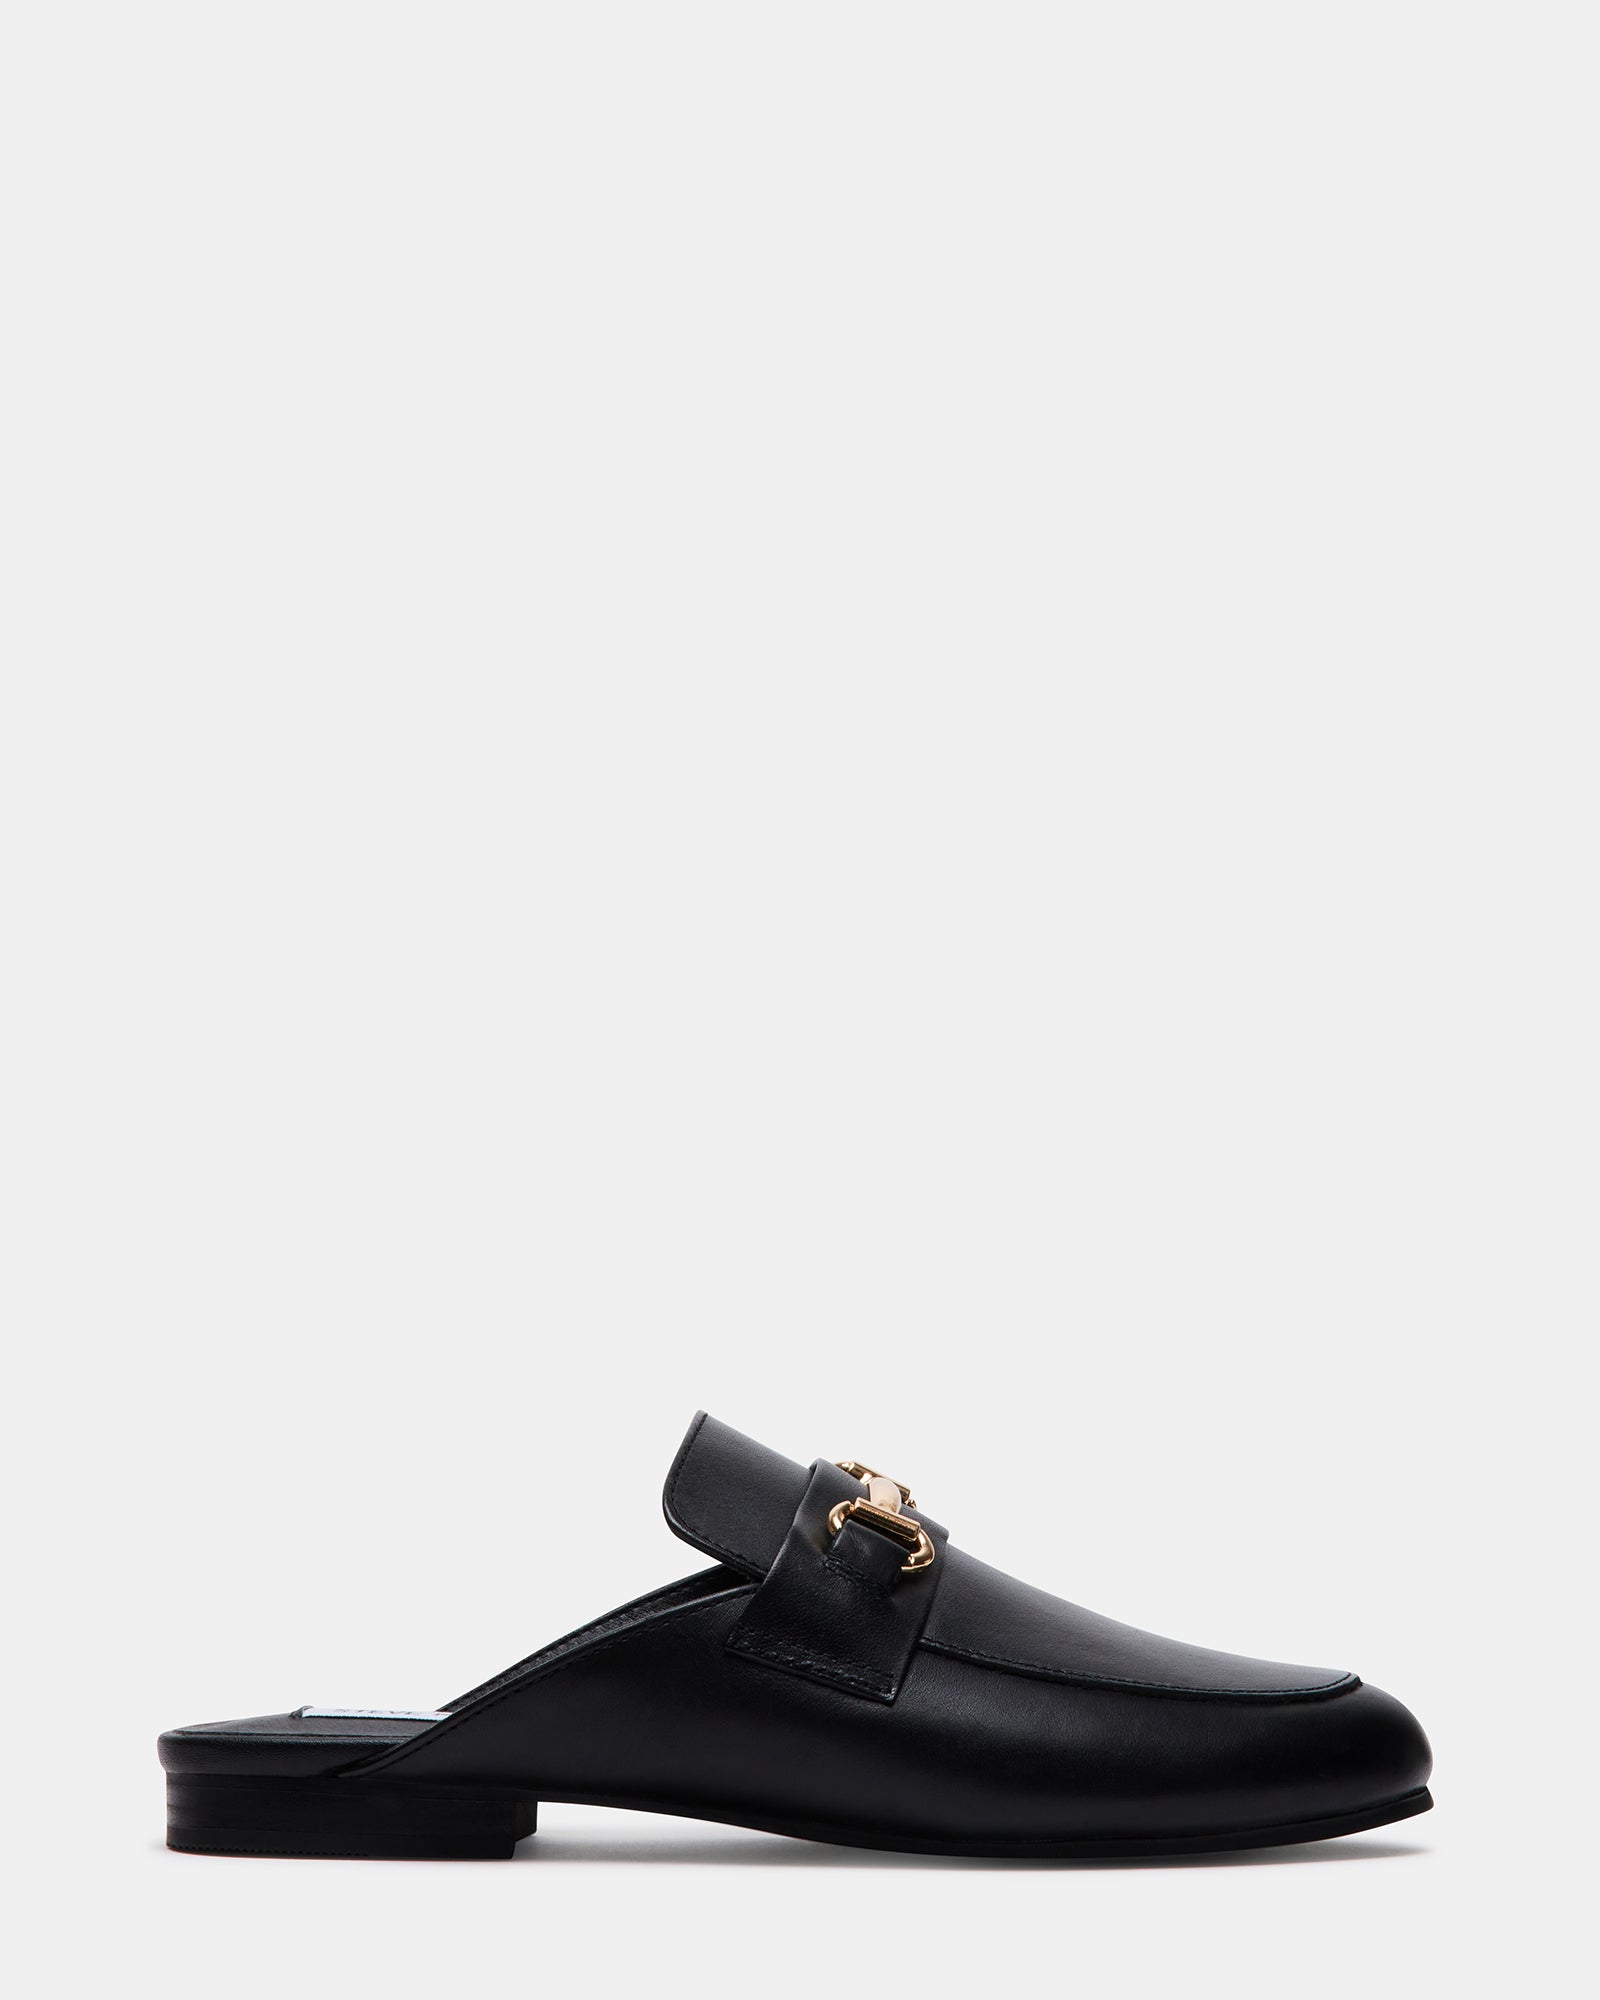 KANDI Black Leather Loafer | Black Designer Loafers for Women – Steve ...